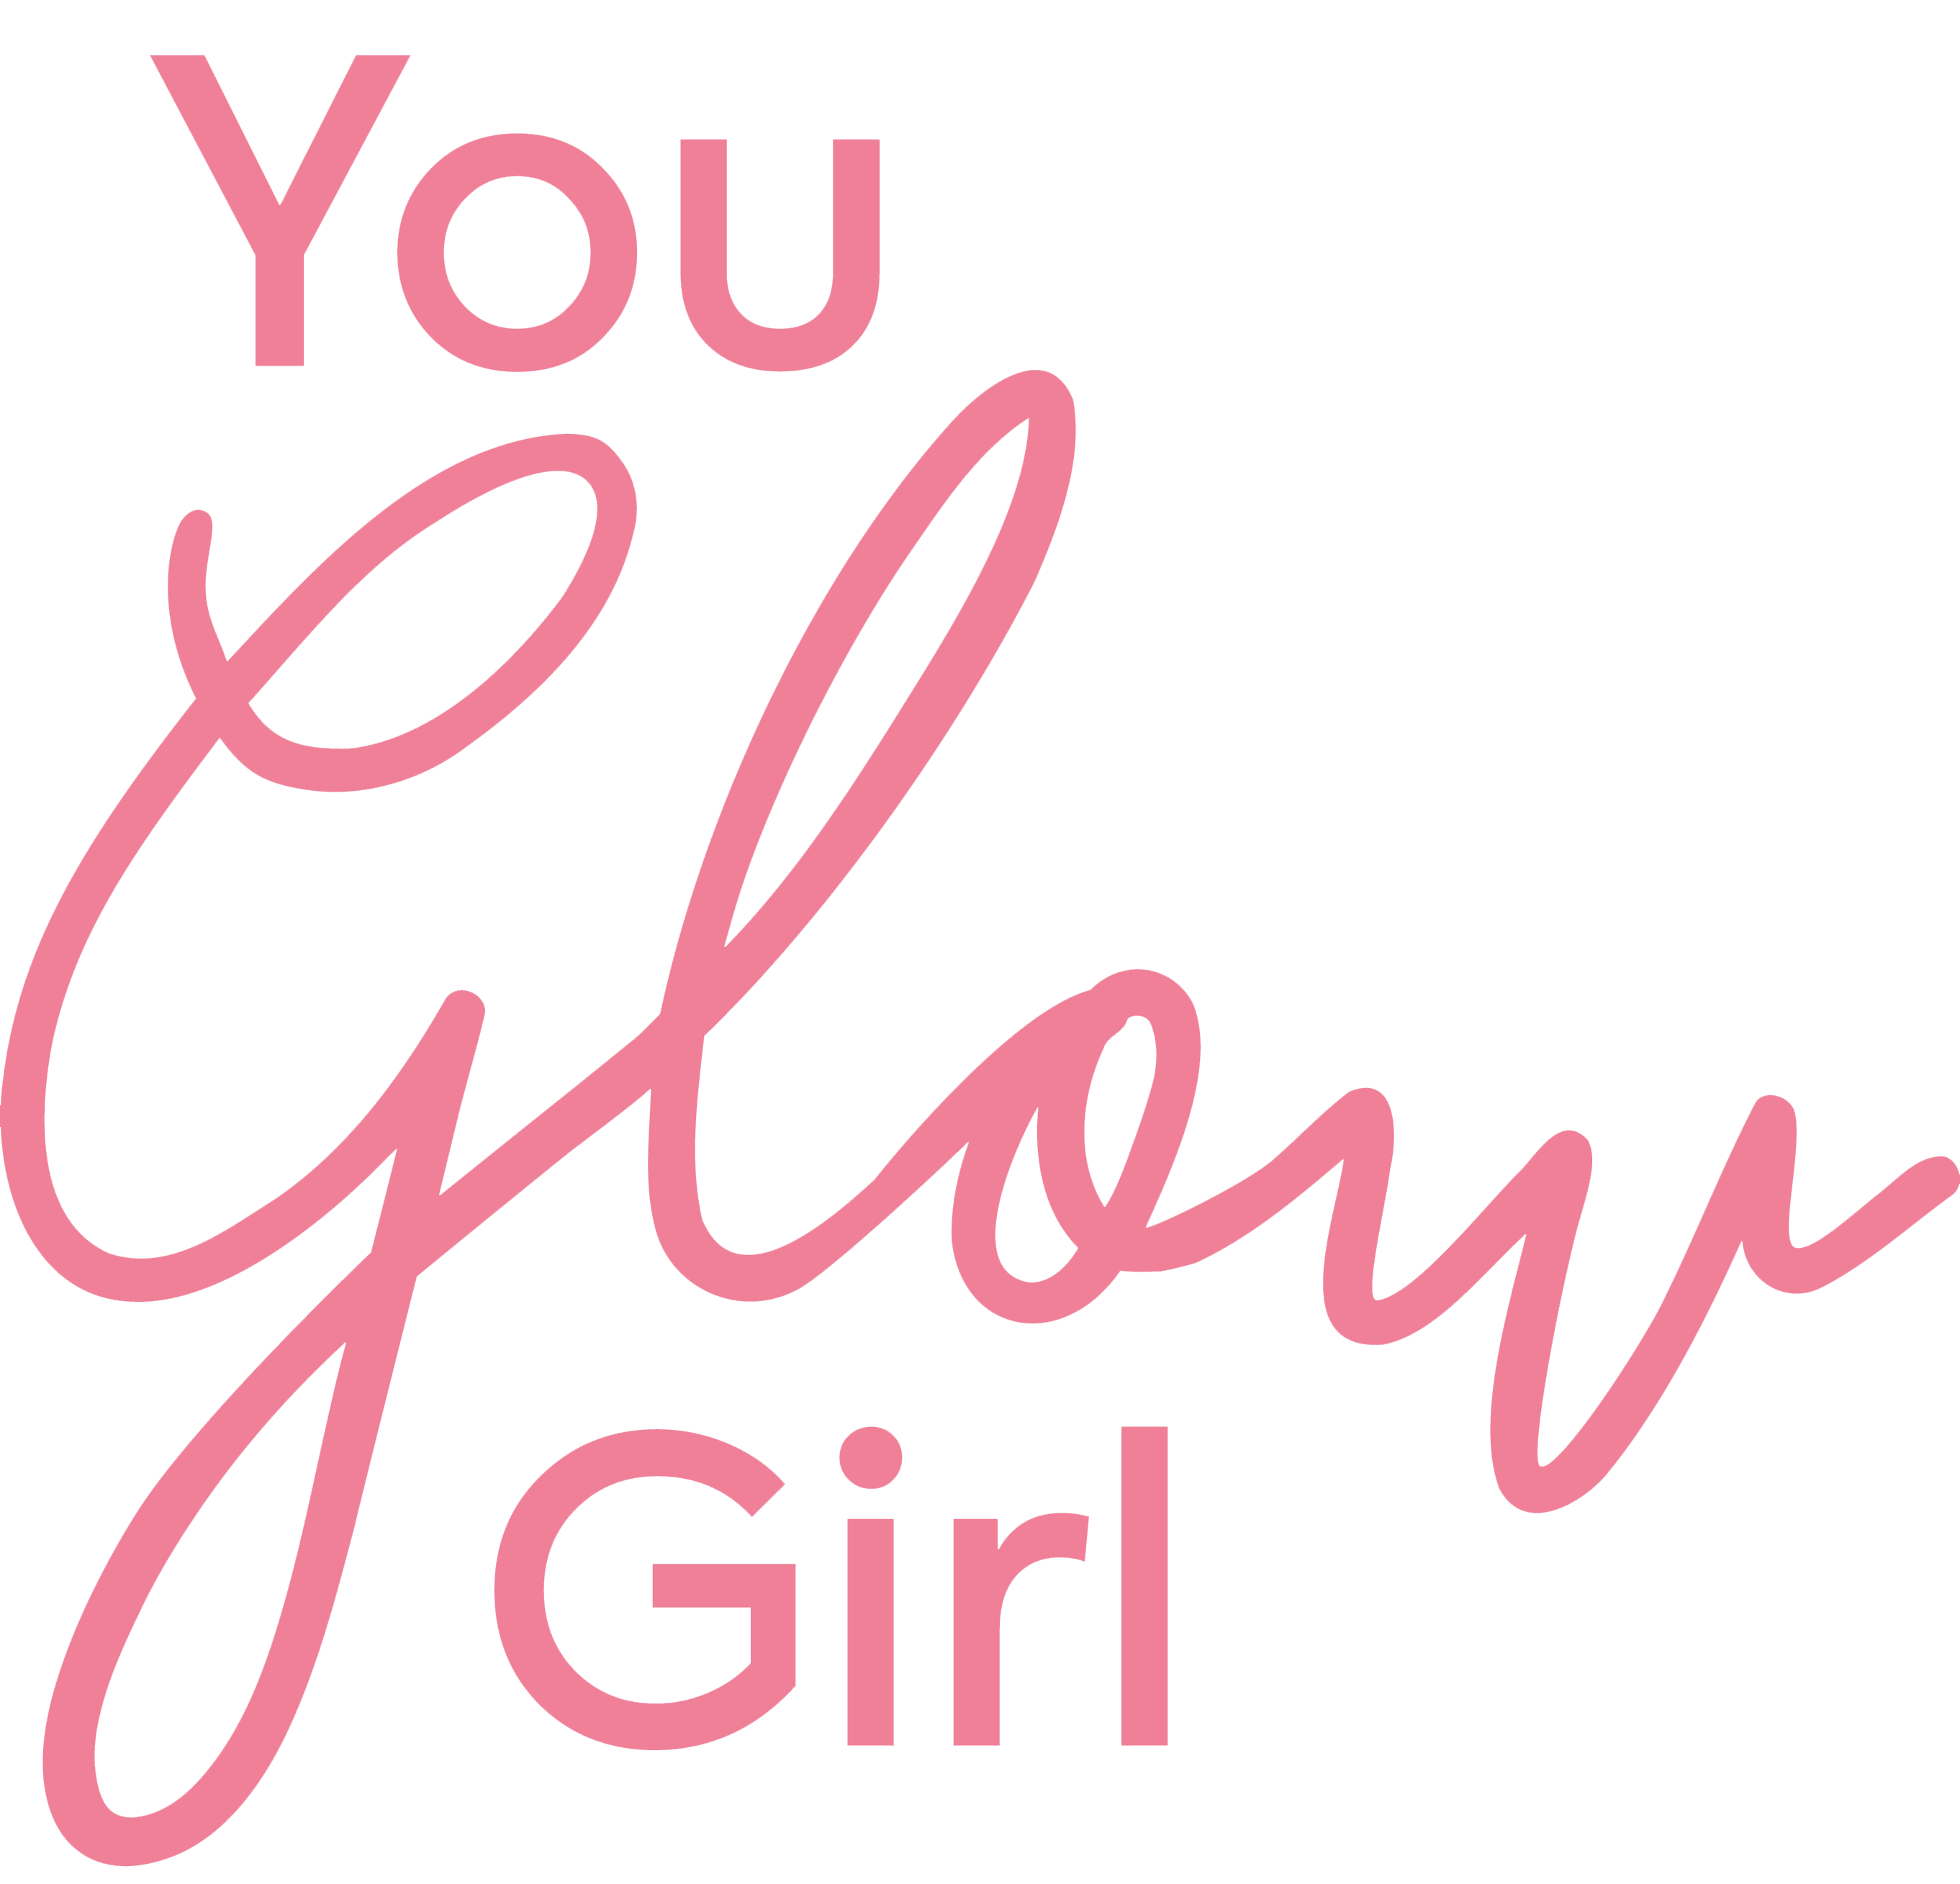 You Glow Girl - A Social Enterprise To Empower Women